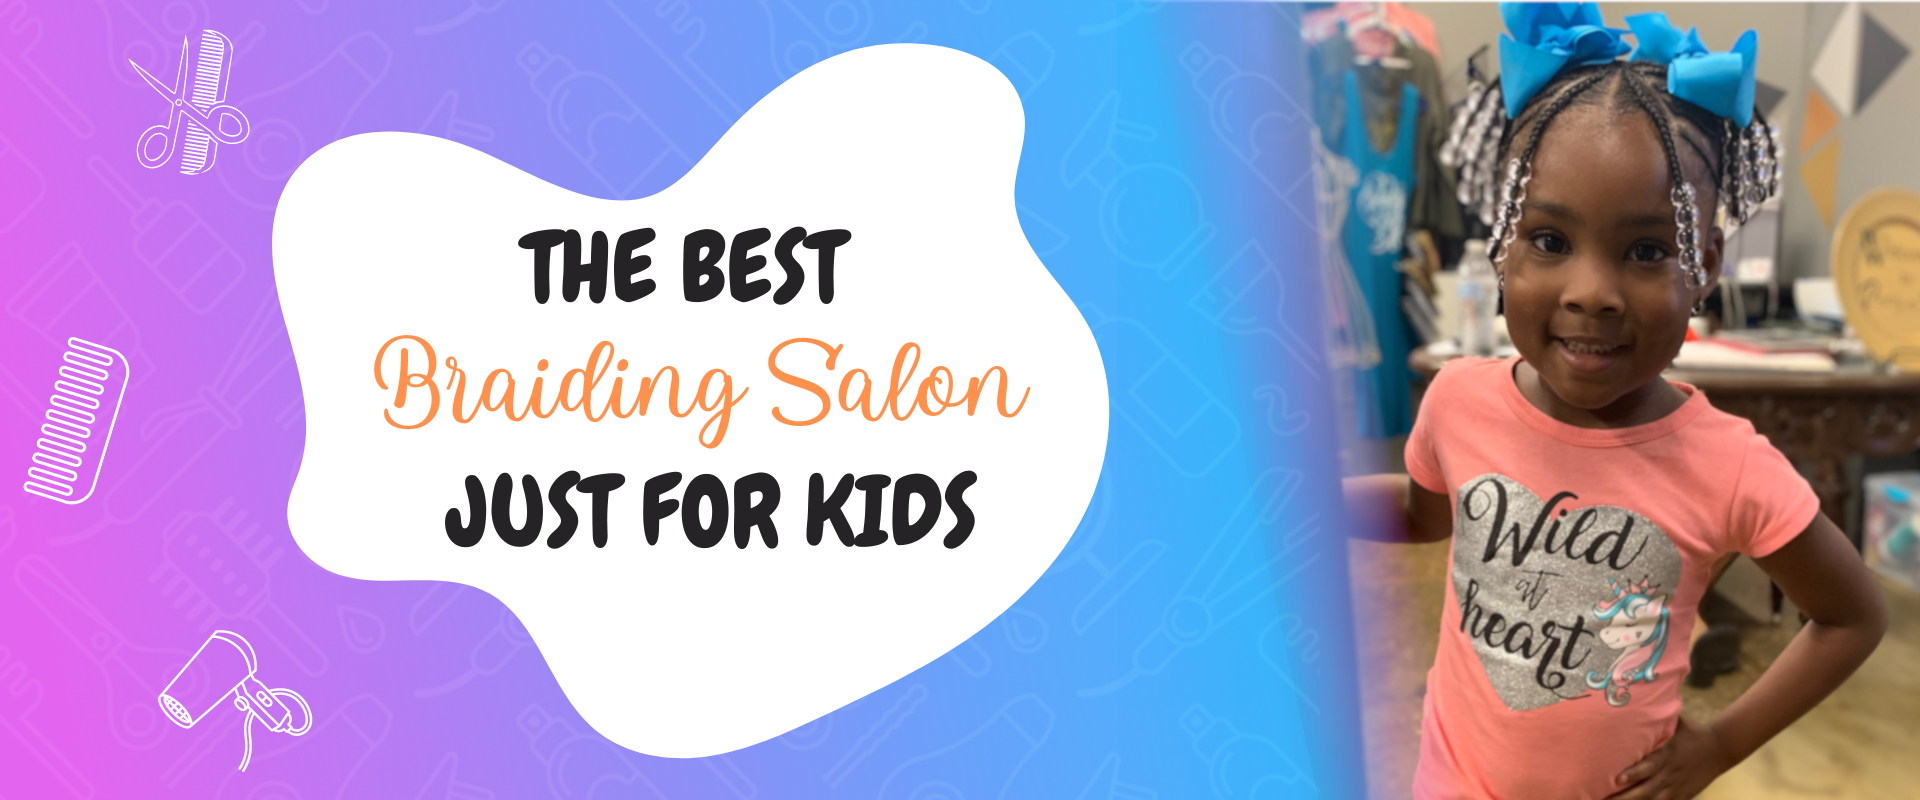 The best braiding salon just for kids